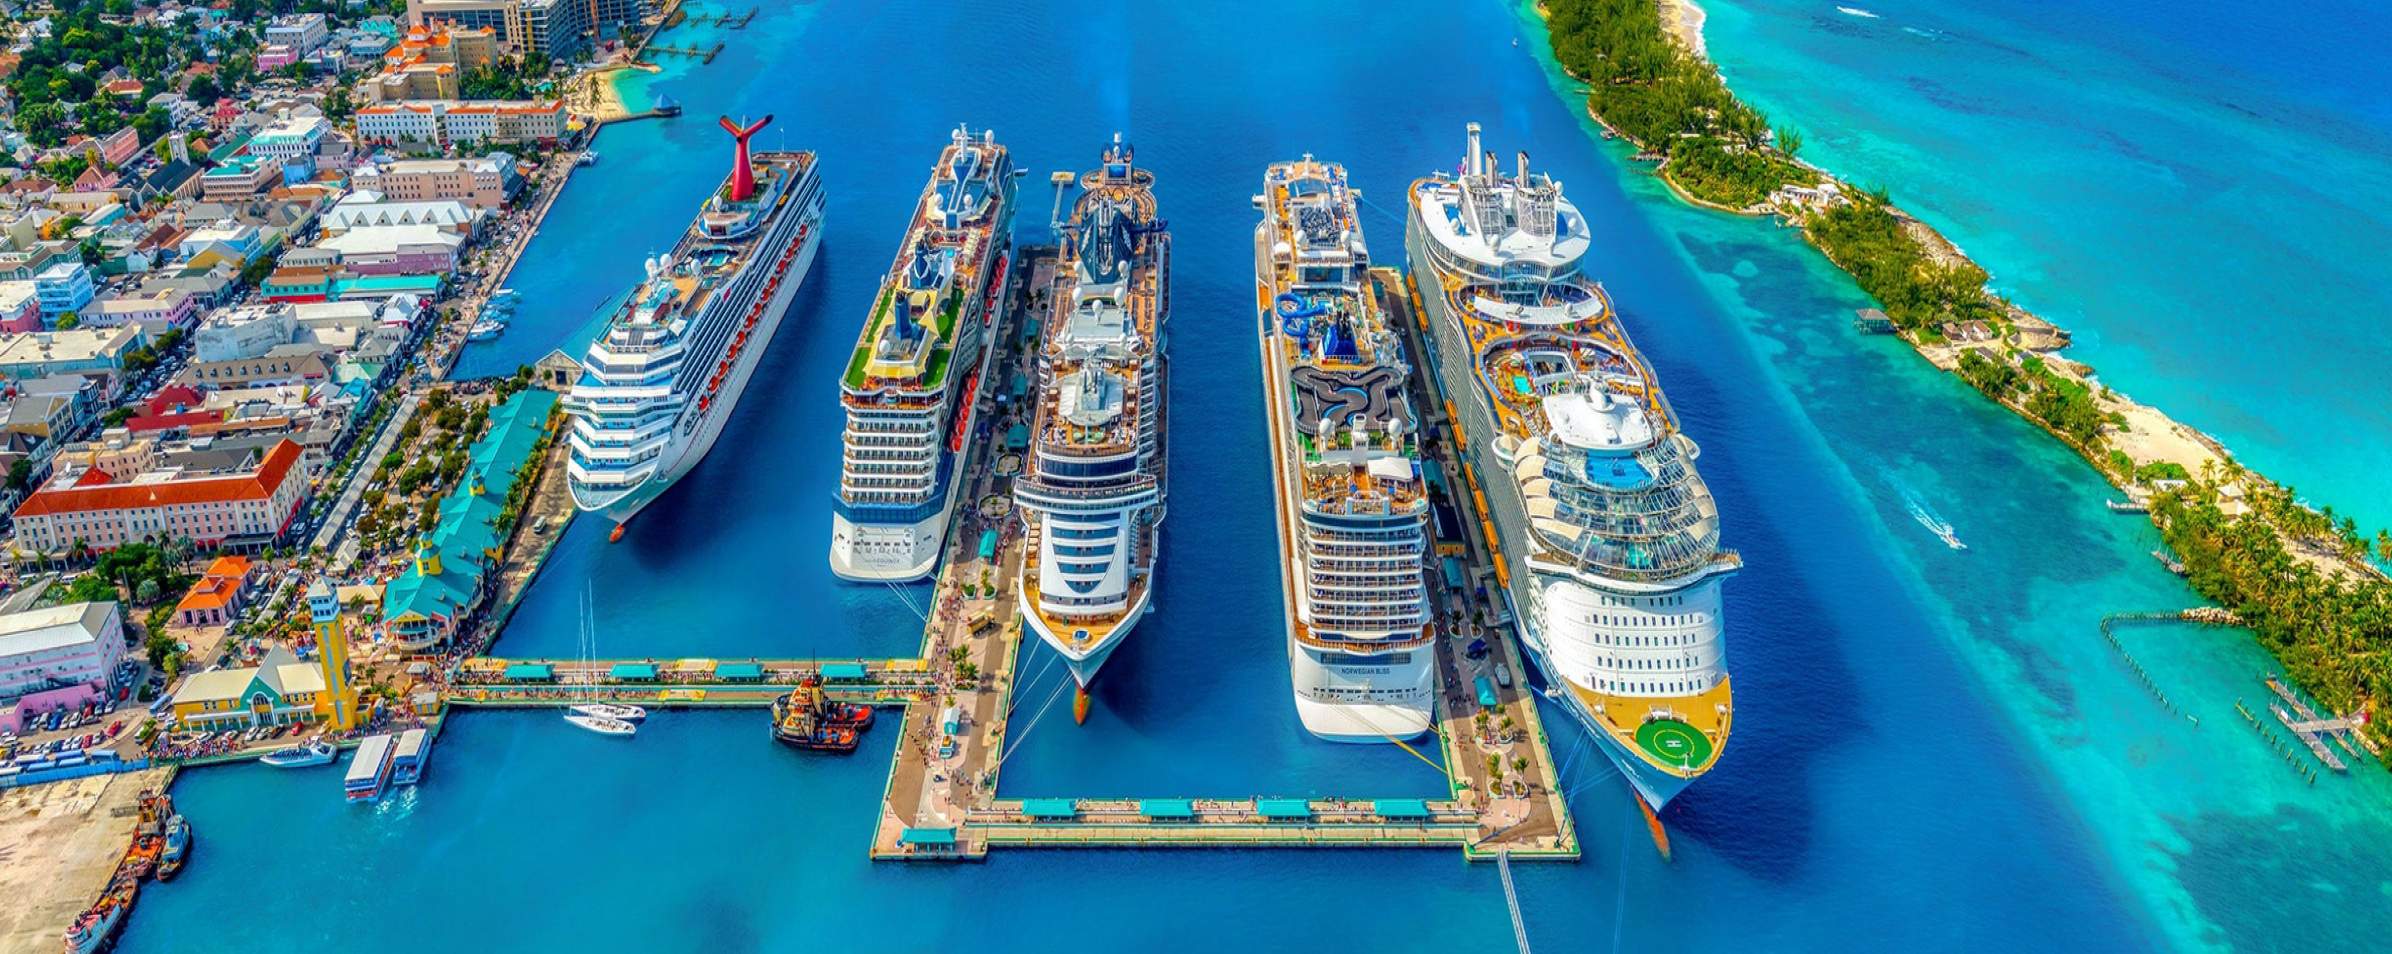 Several large cruise ships